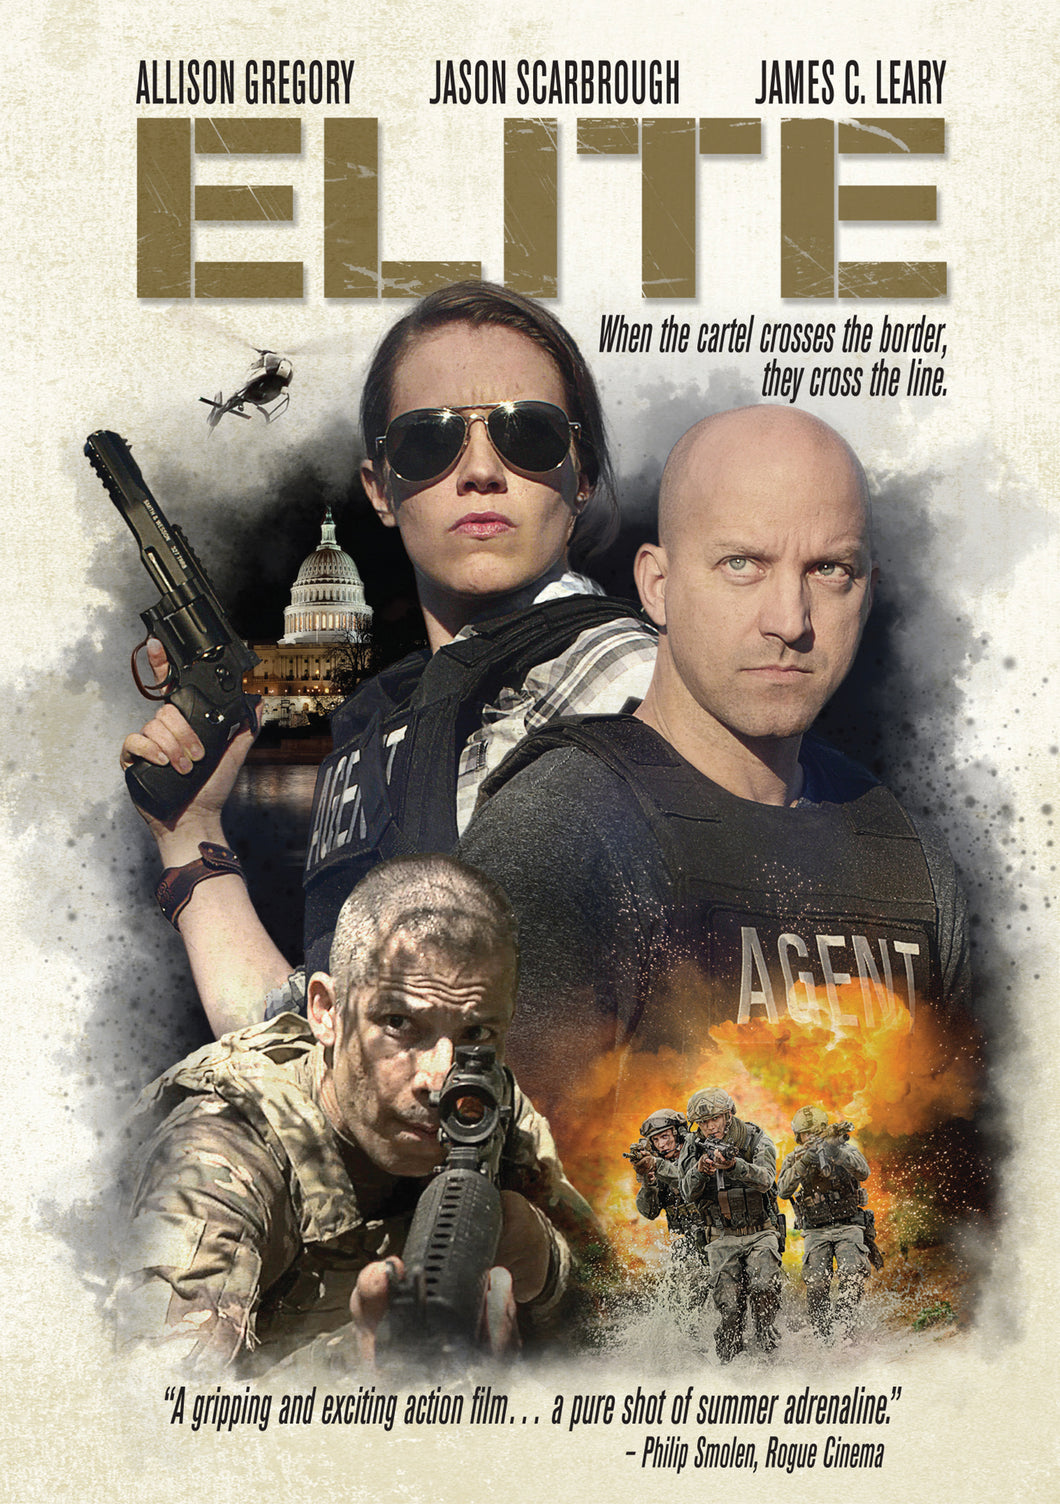 Elite (DVD)